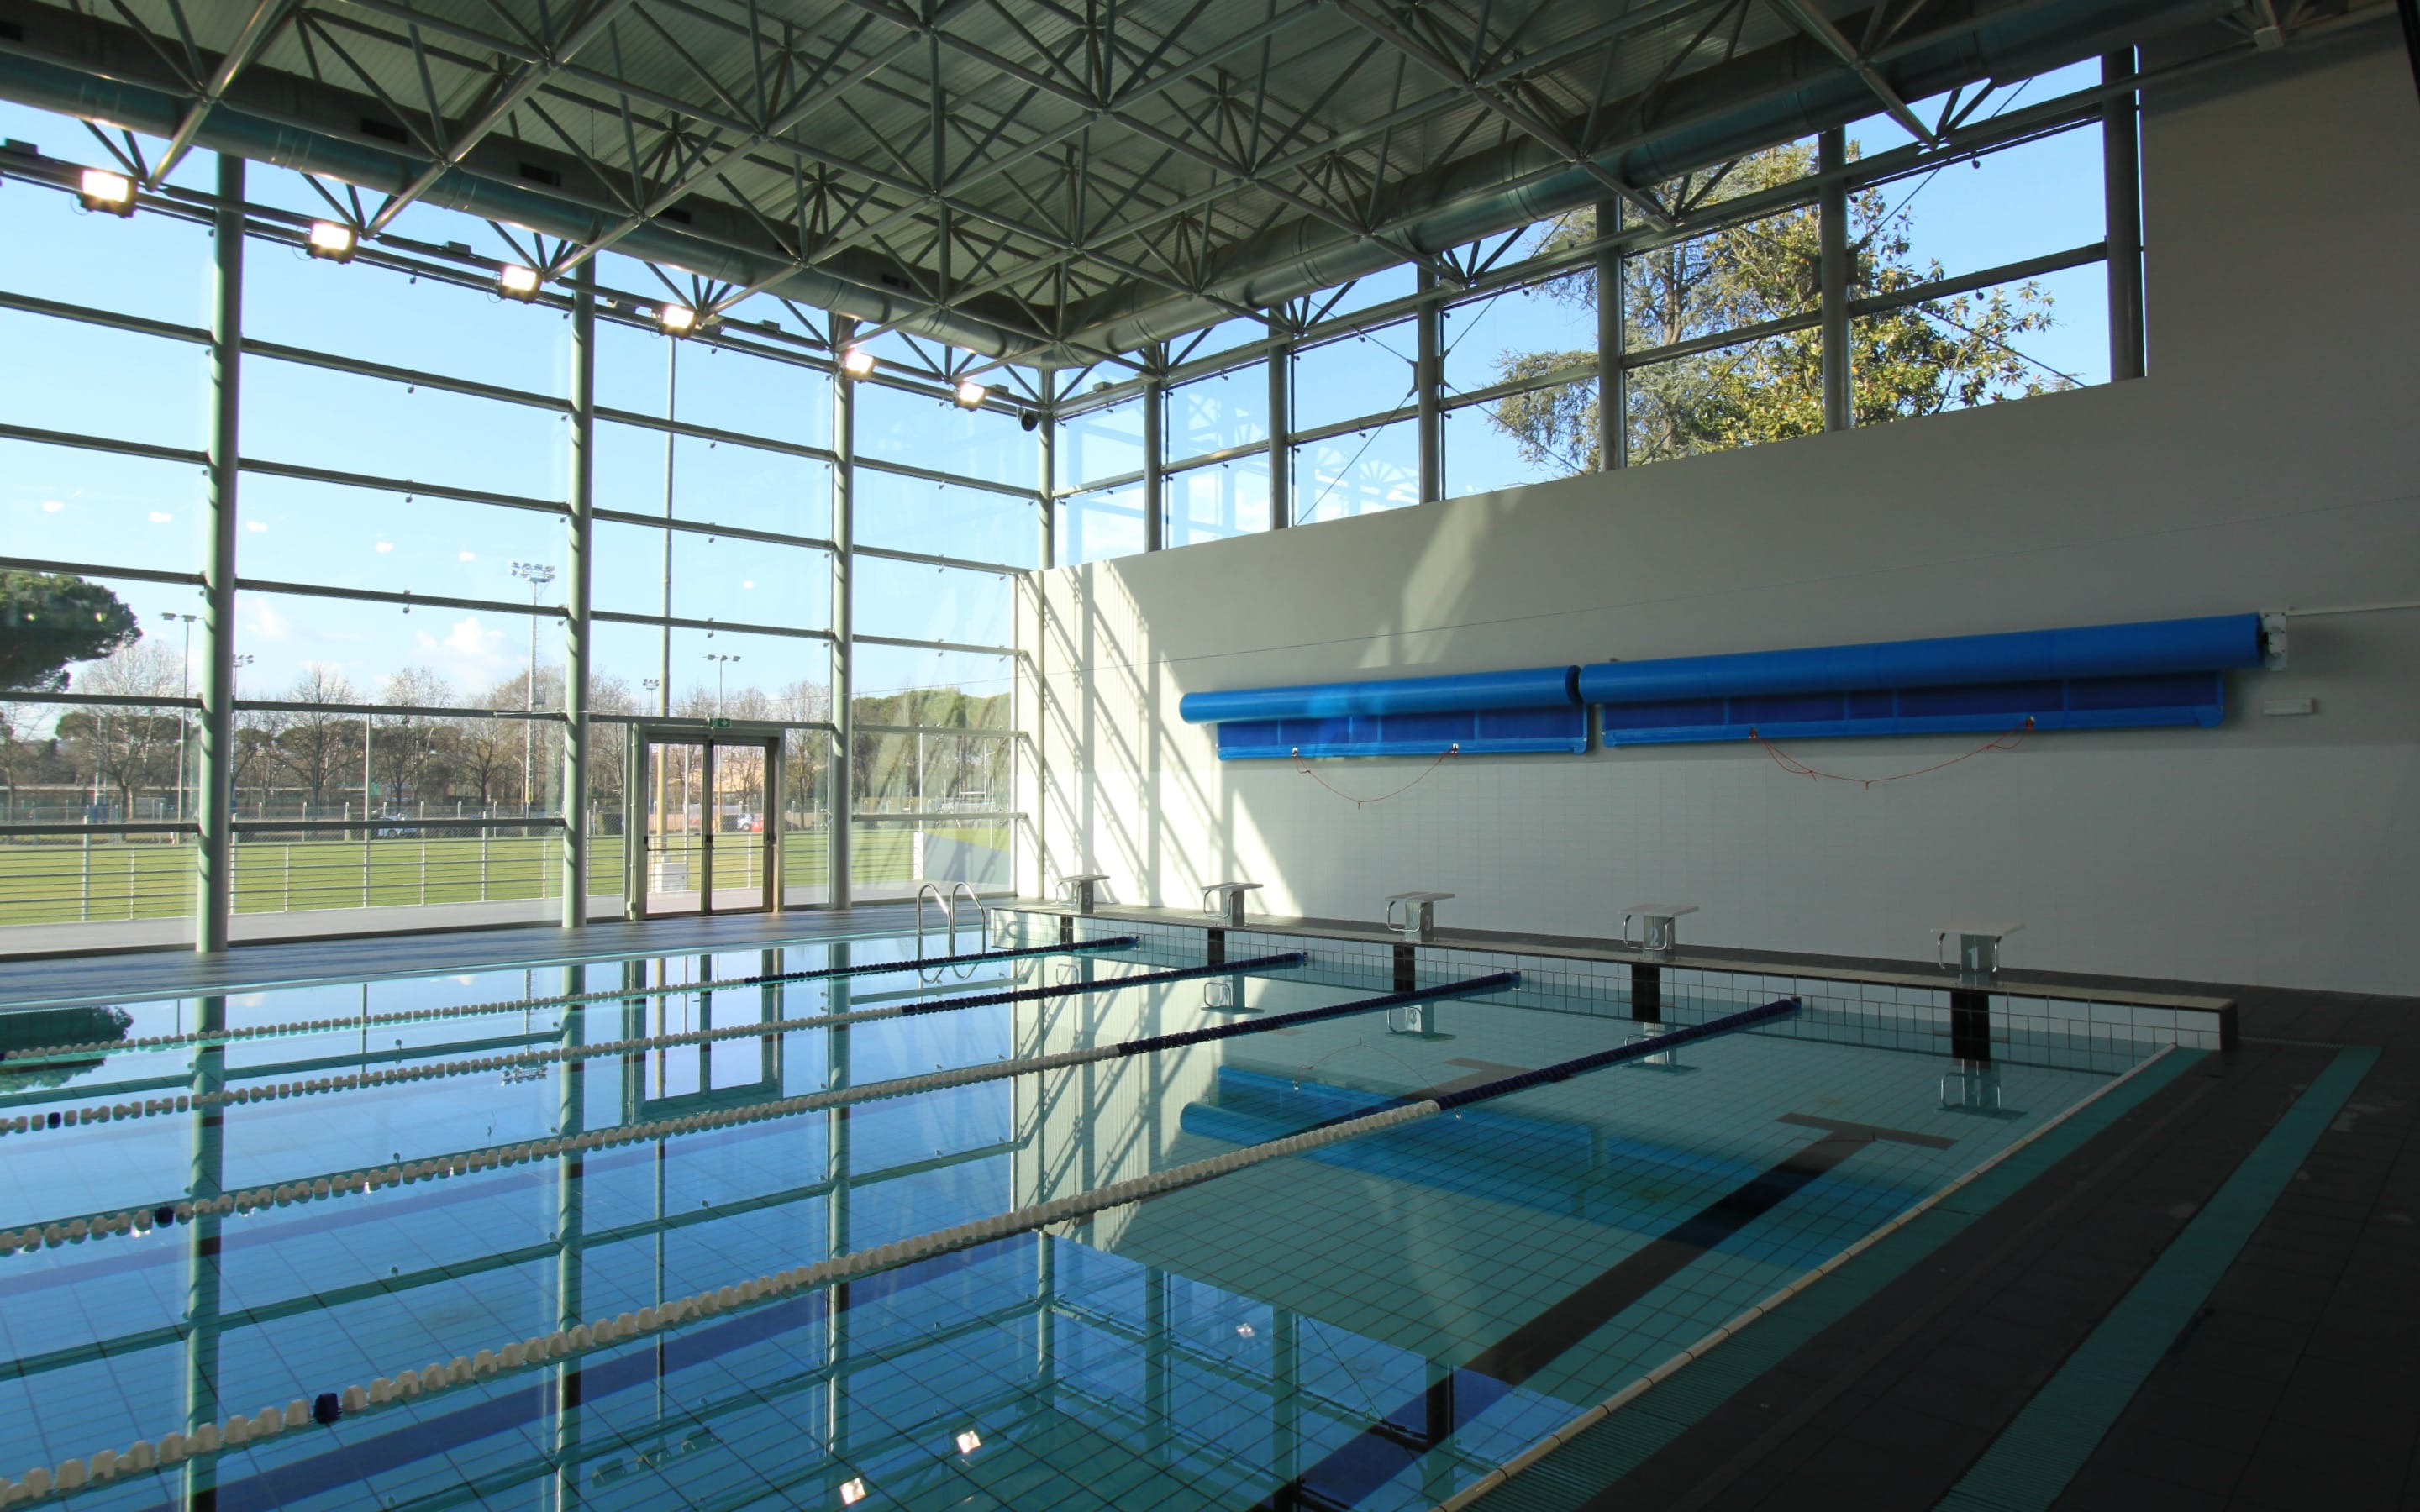 STP SERIES - Pool cover reels for inground pools